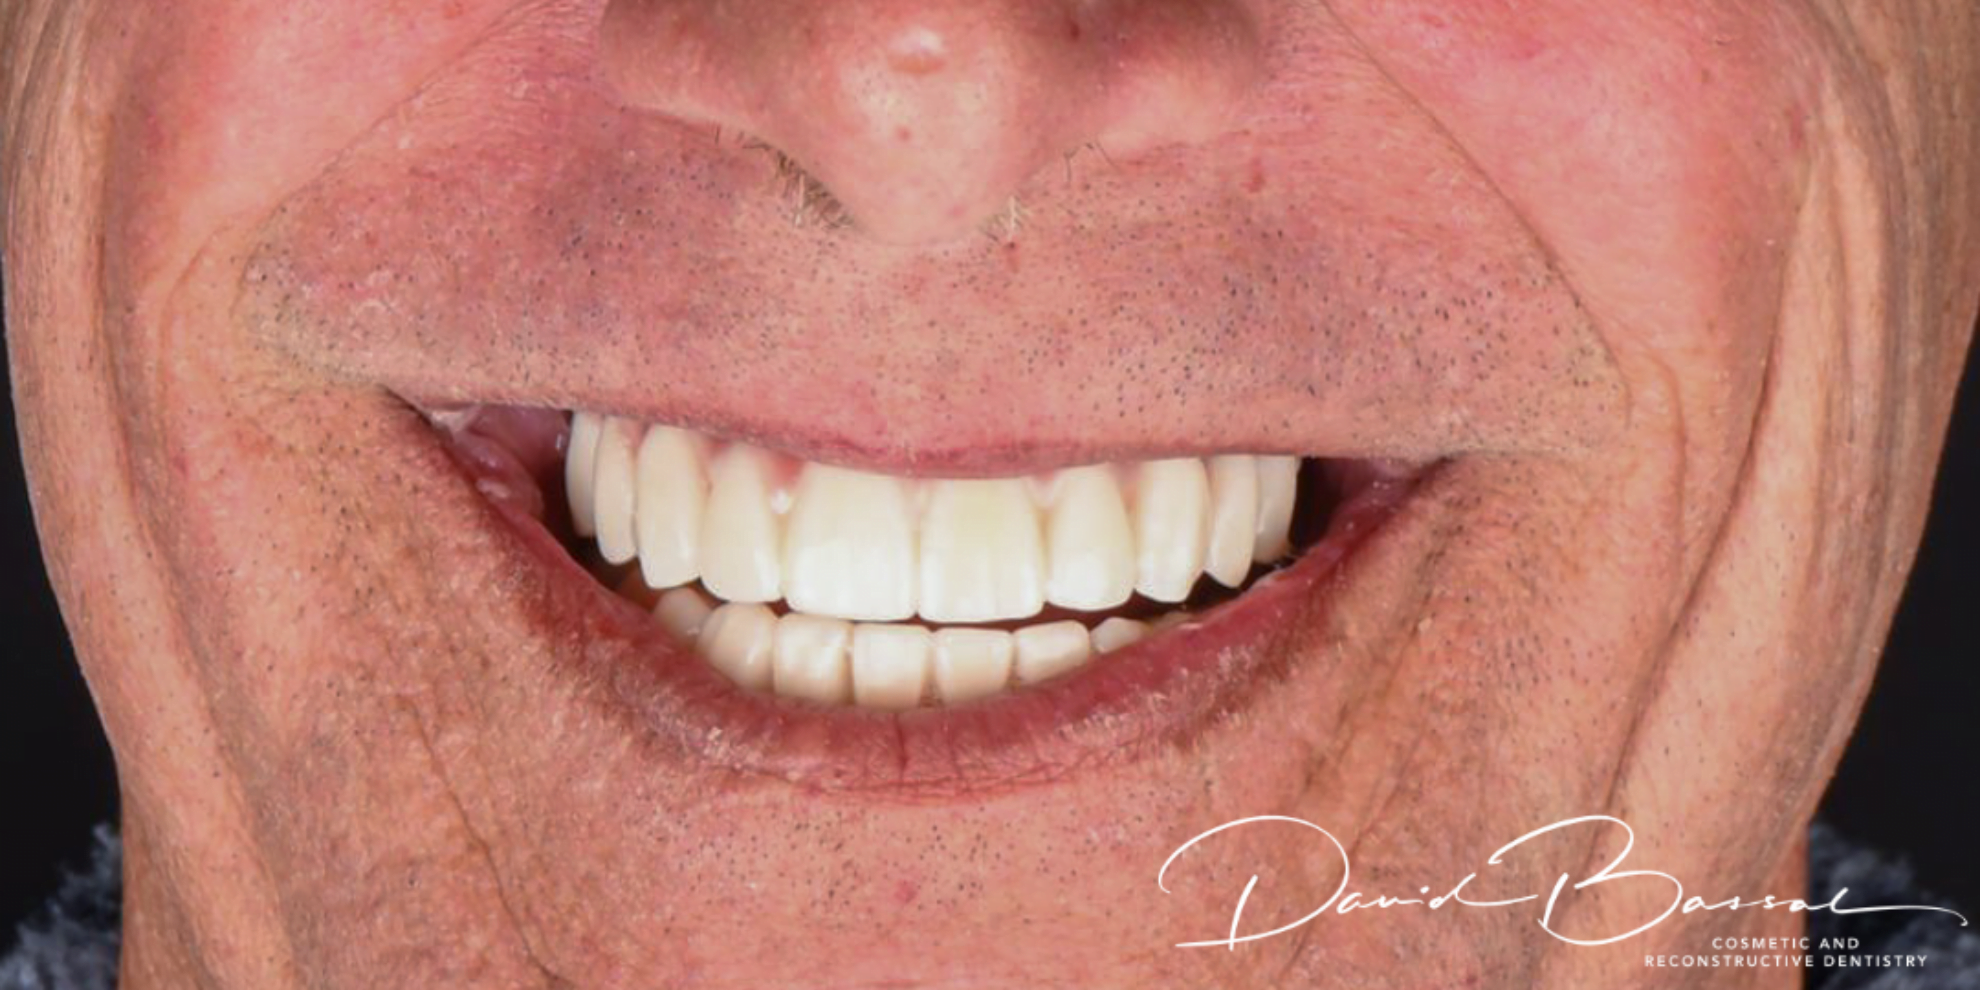 Teeth on Implants - Poynton Place Dental Implants